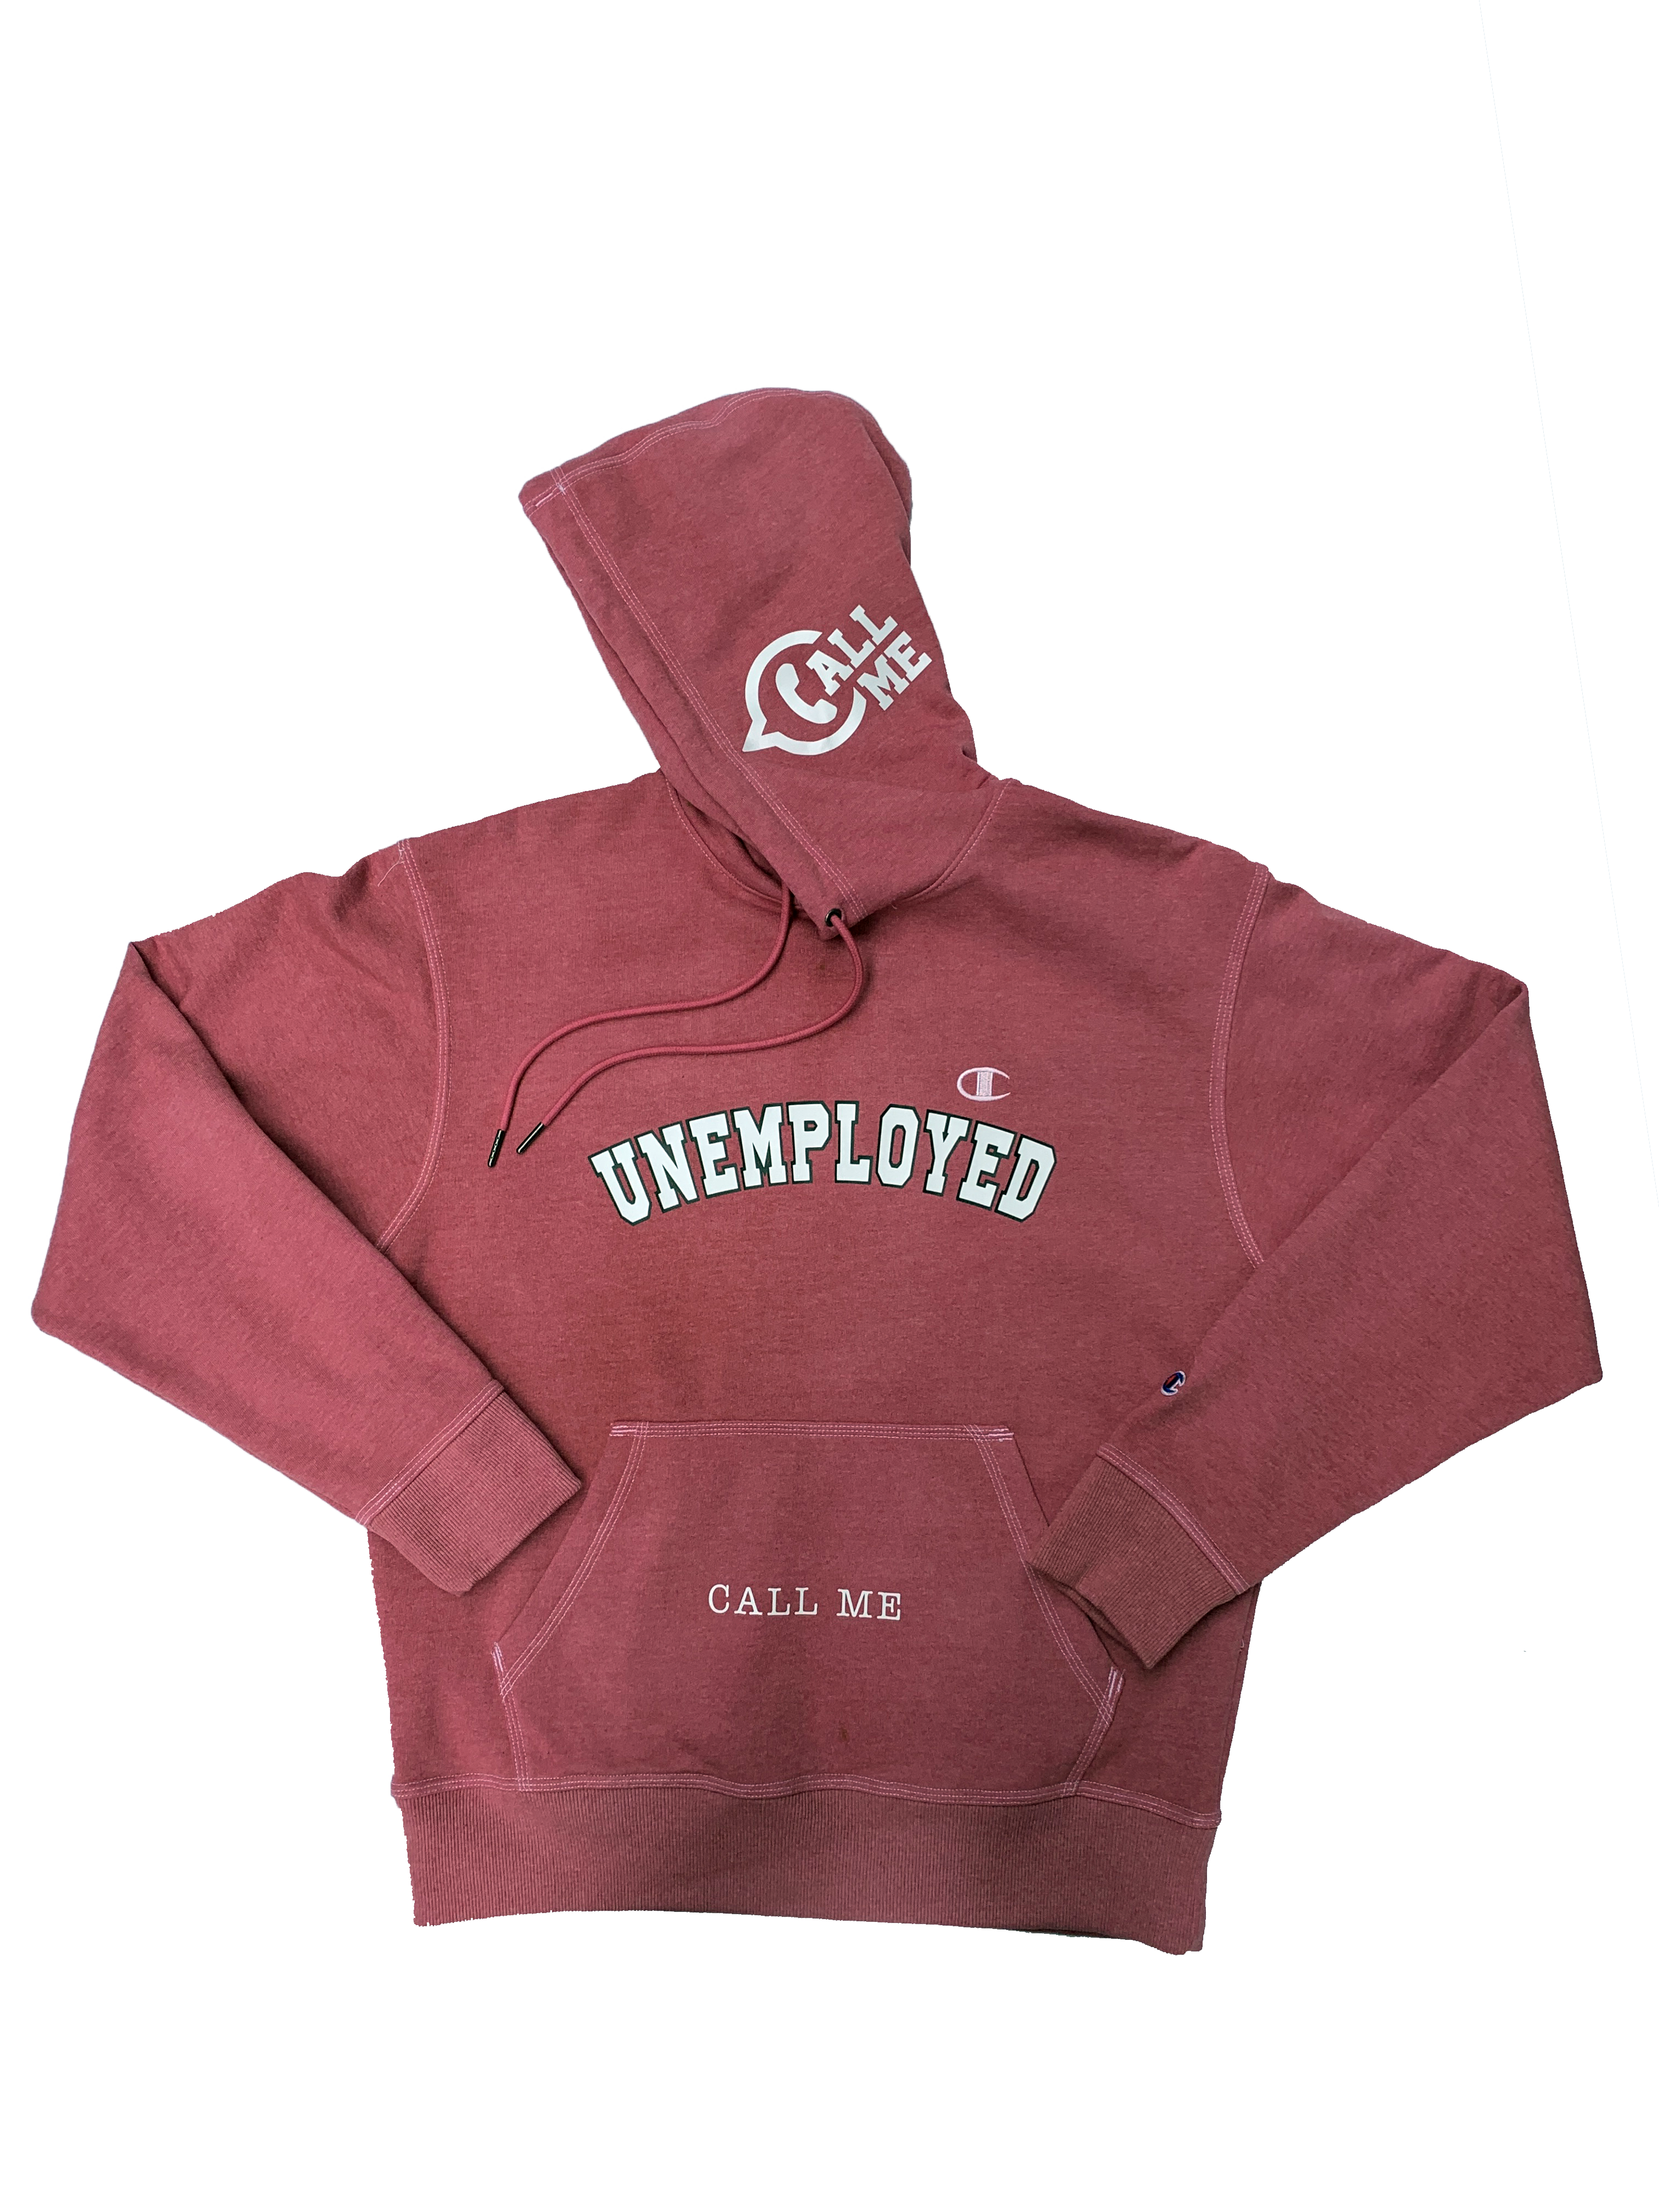 unemployed hoodie